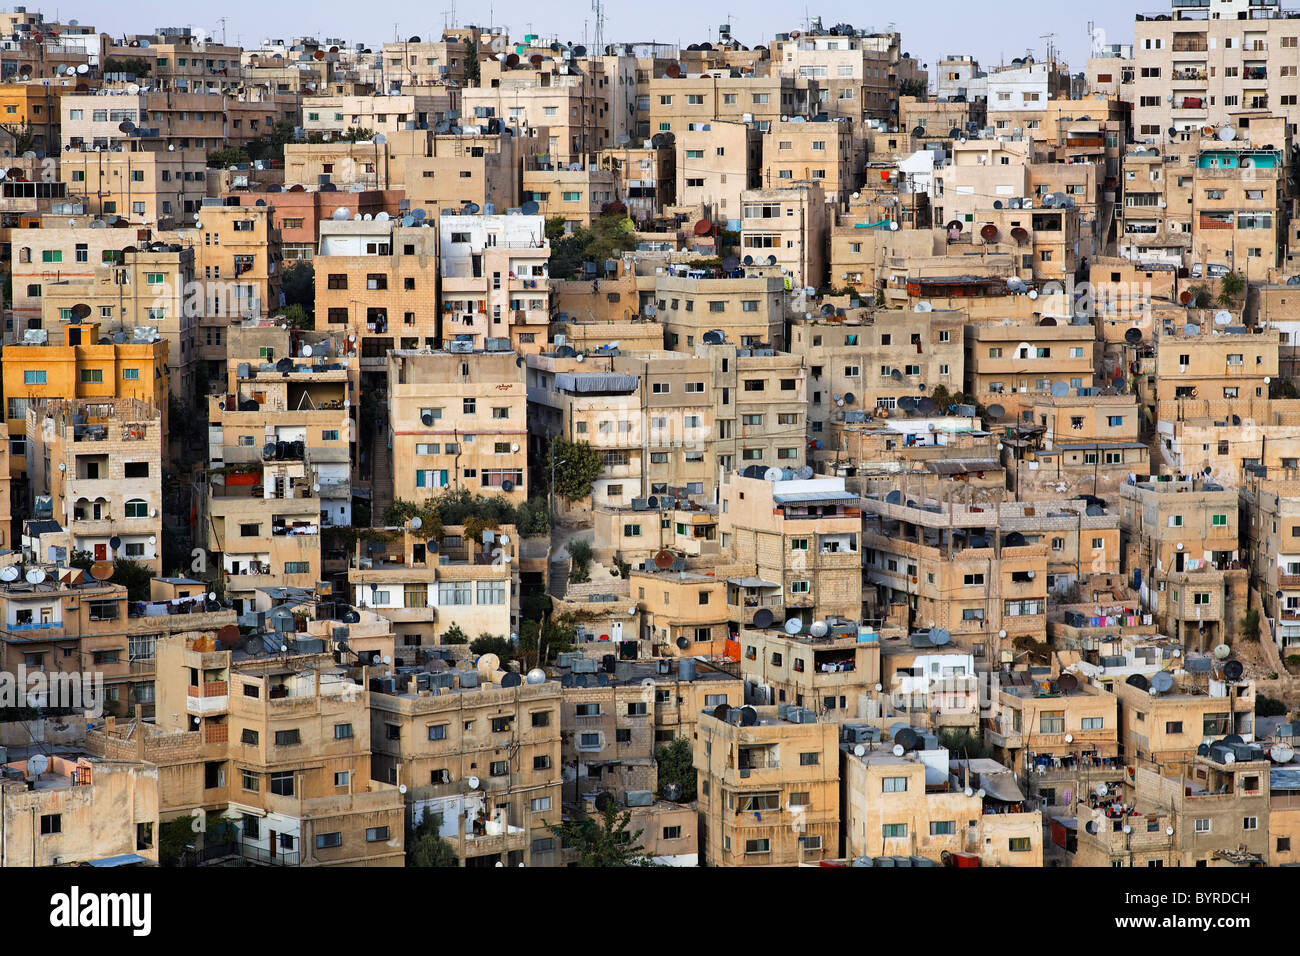 Buildings in the city of Amman, Jordan Stock Photo - Alamy